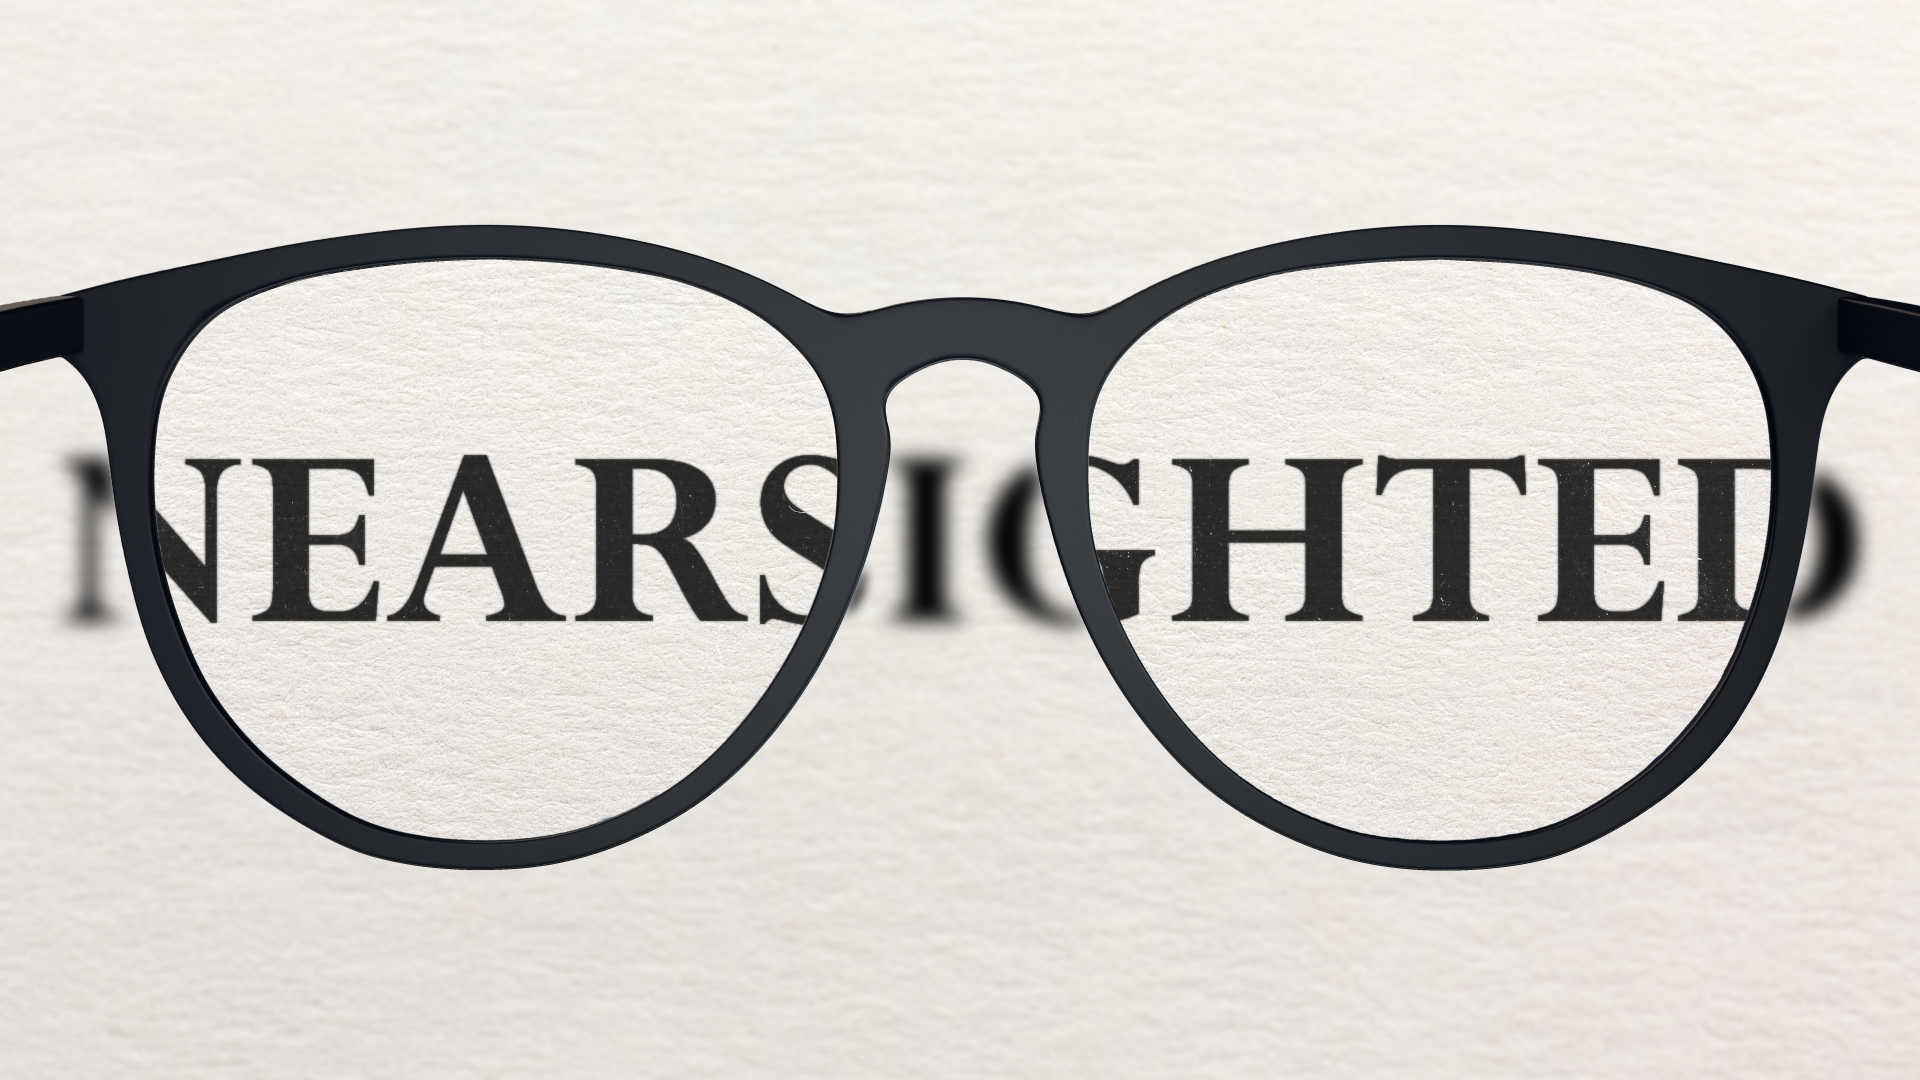 “Nearsighted: Marginalized”